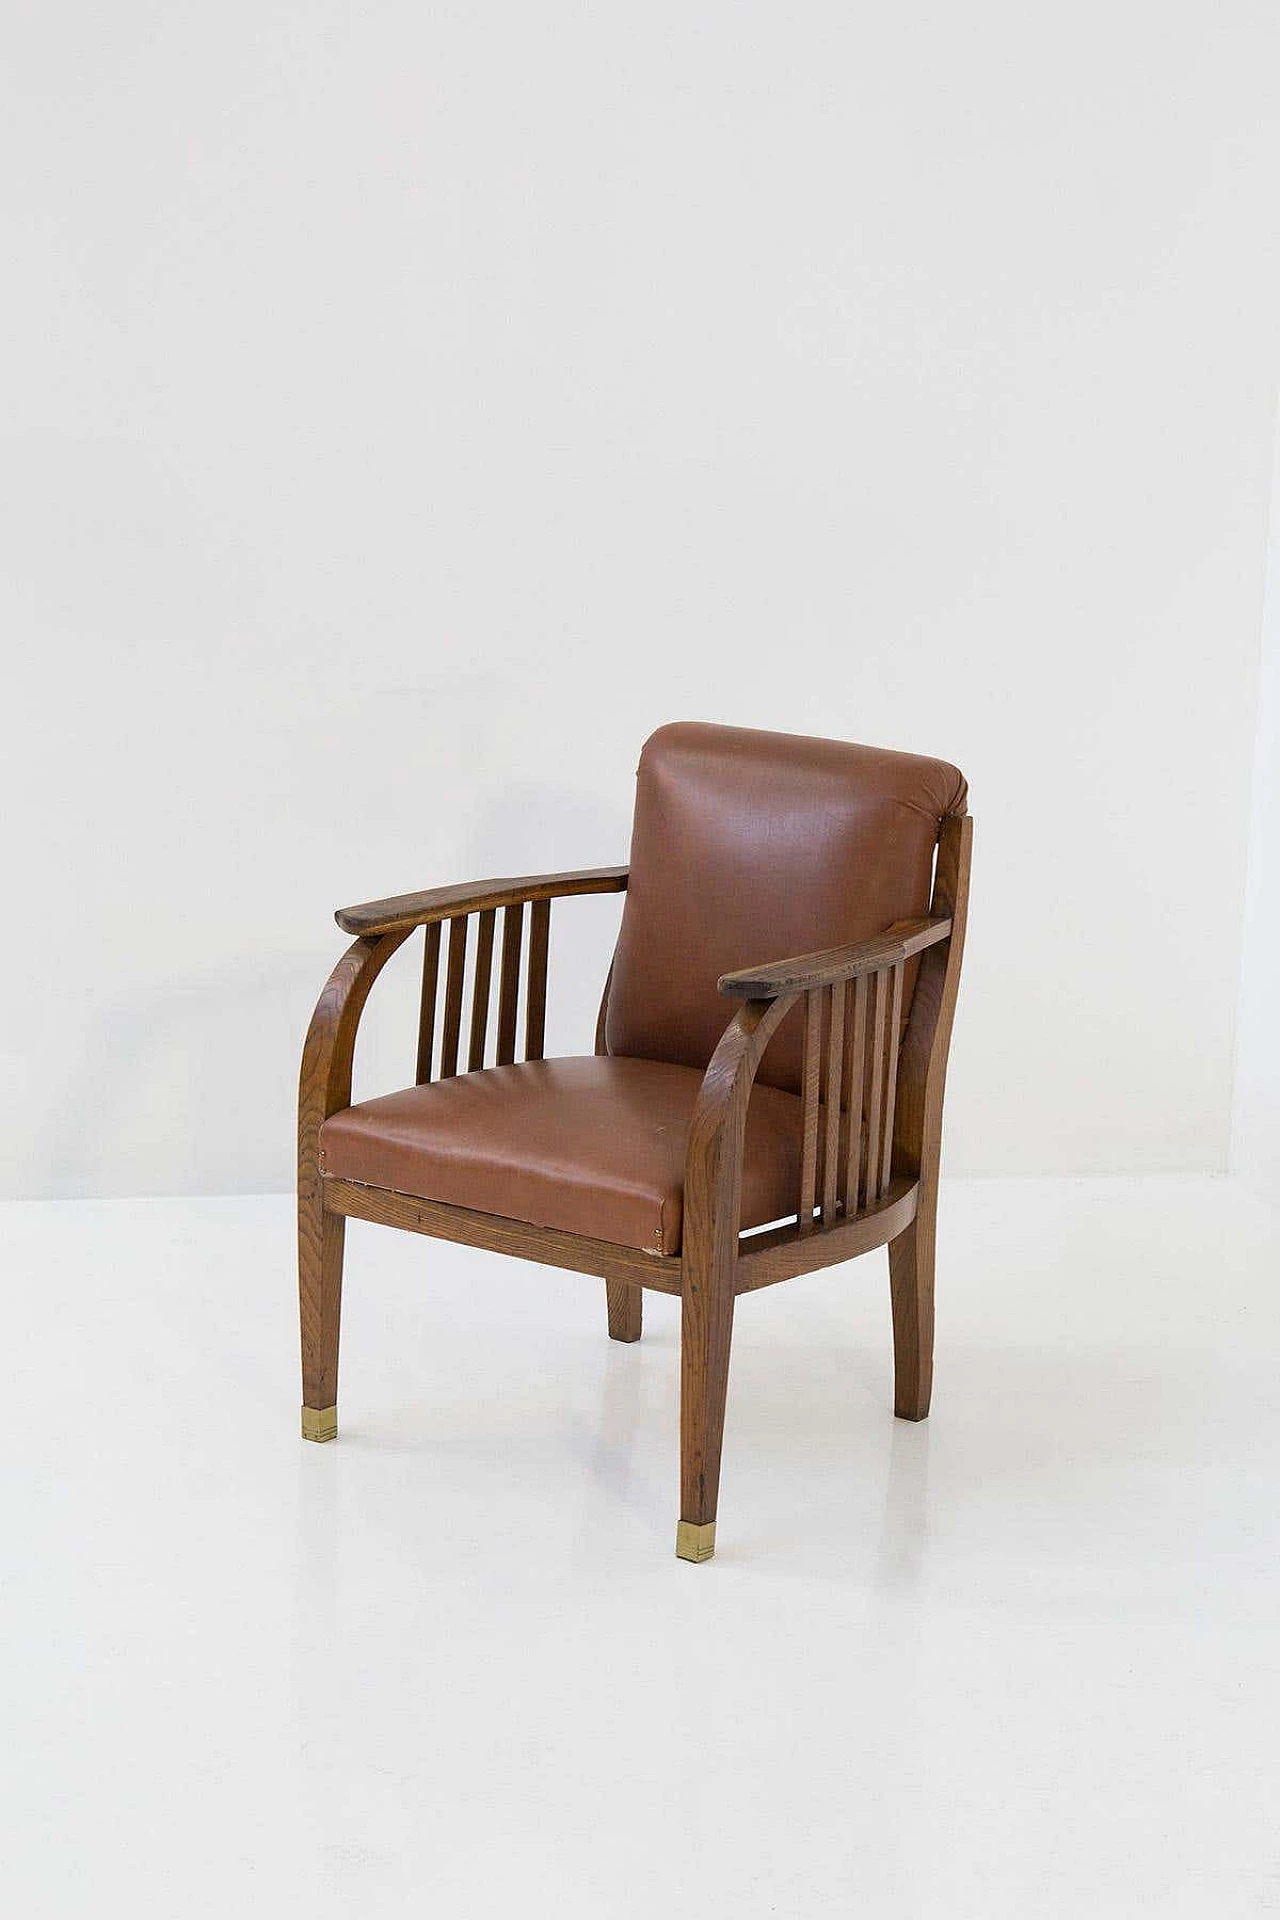 Eleg leather and wood armchair attributed to Jacob and Josef Kohn, 1920s 2